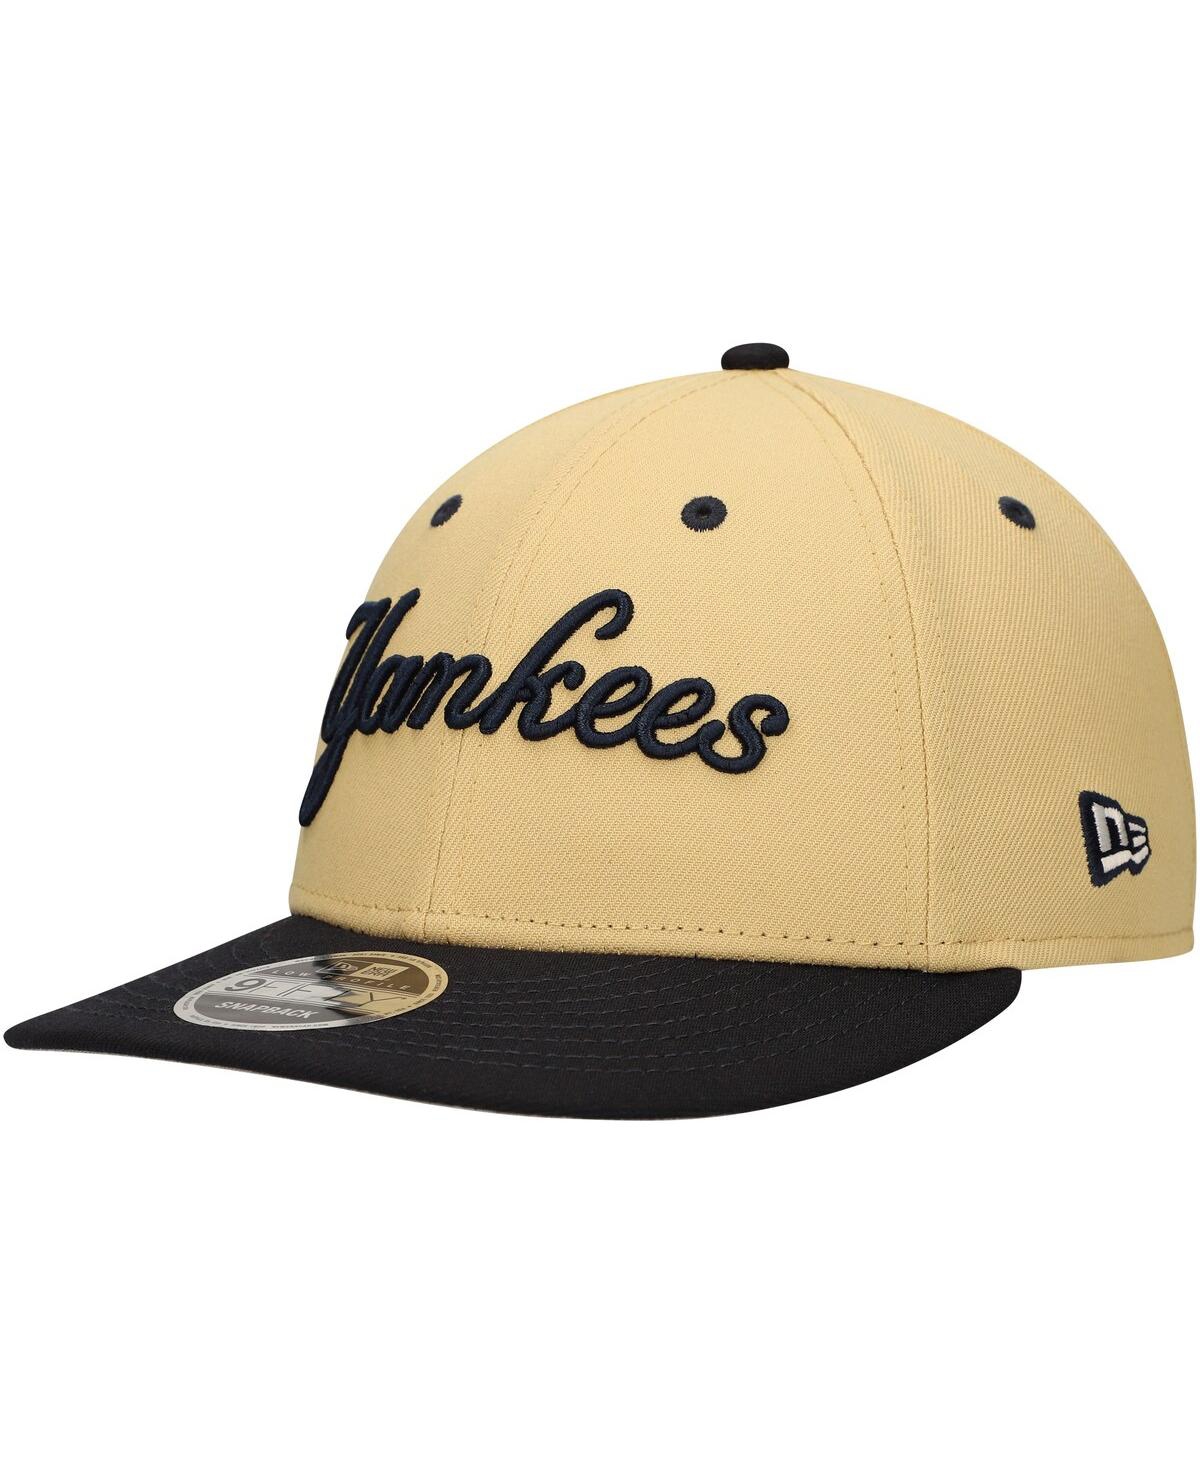 Shop New Era Men's  X Felt Gold New York Yankees Low Profile 9fifty Snapback Hat